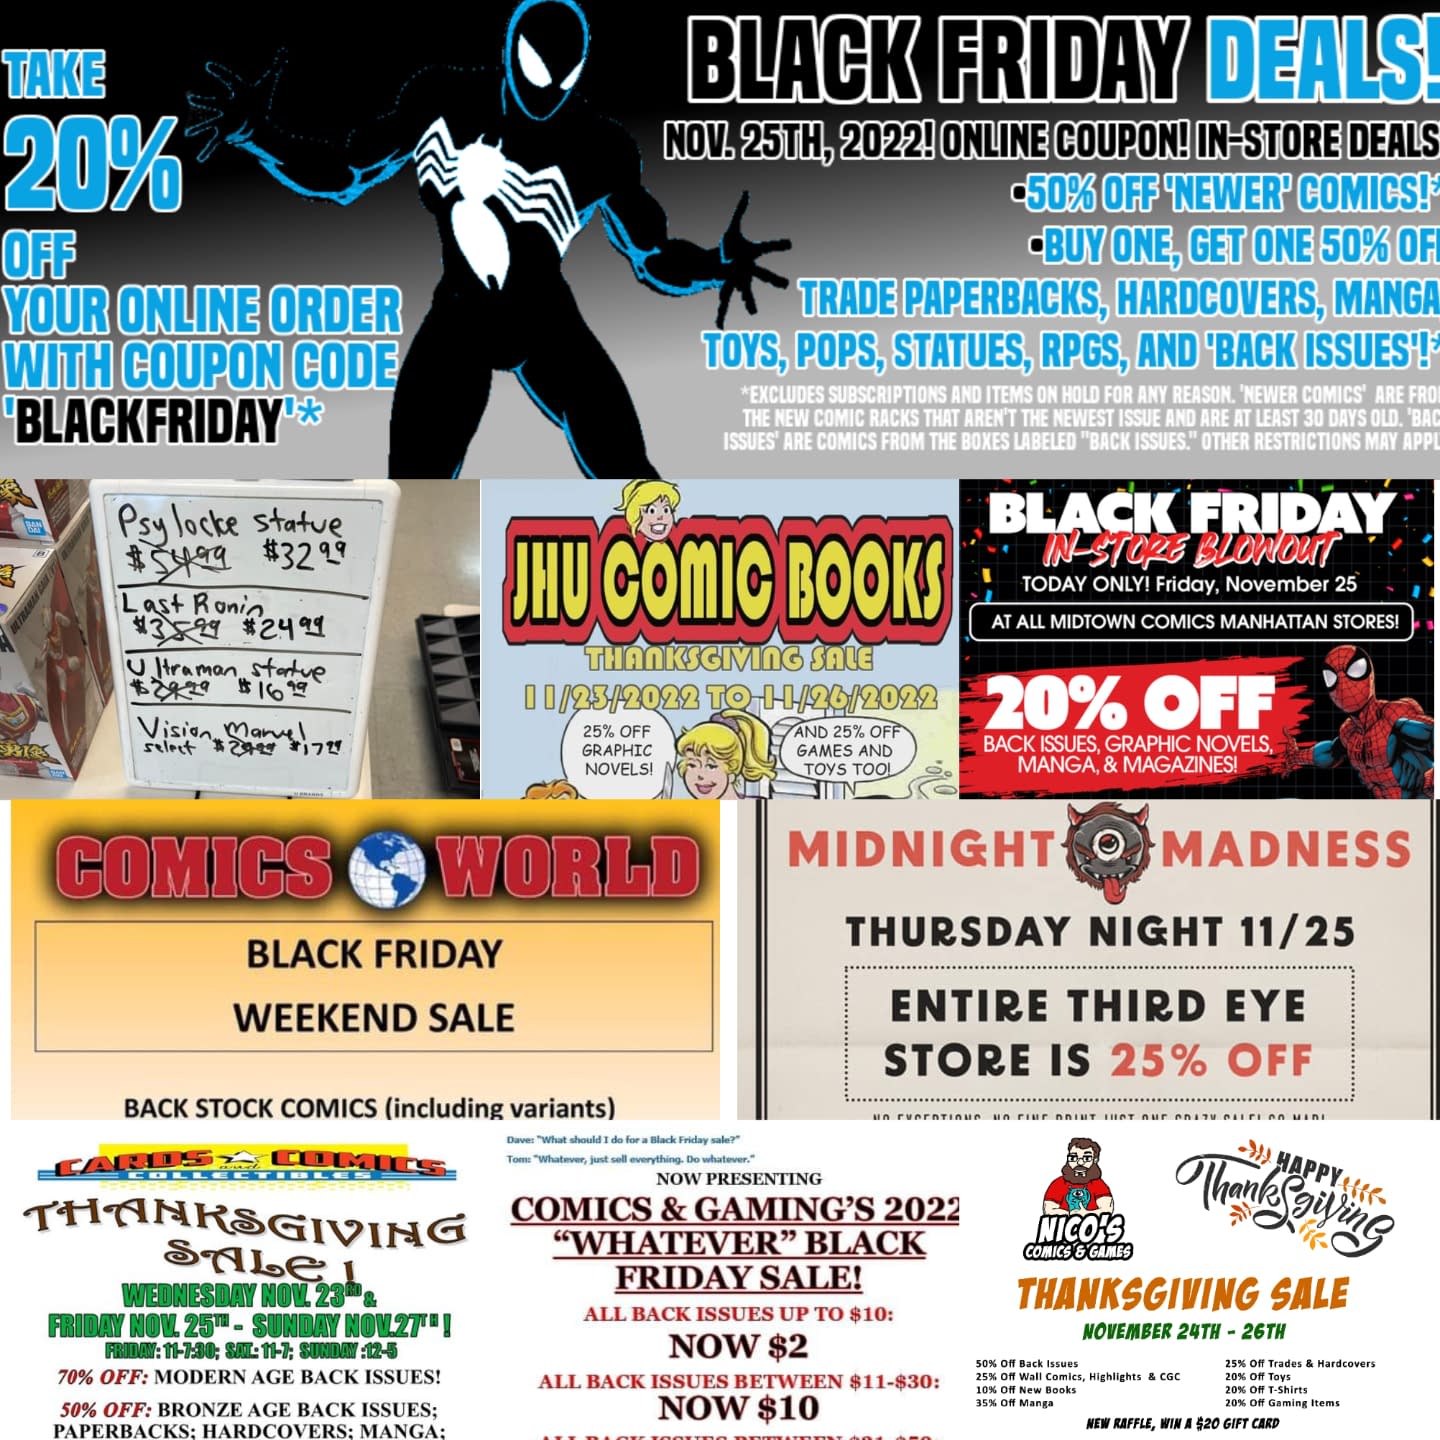 HOT Black Friday Tool Deals, Doorbusters, and Flash Sales!